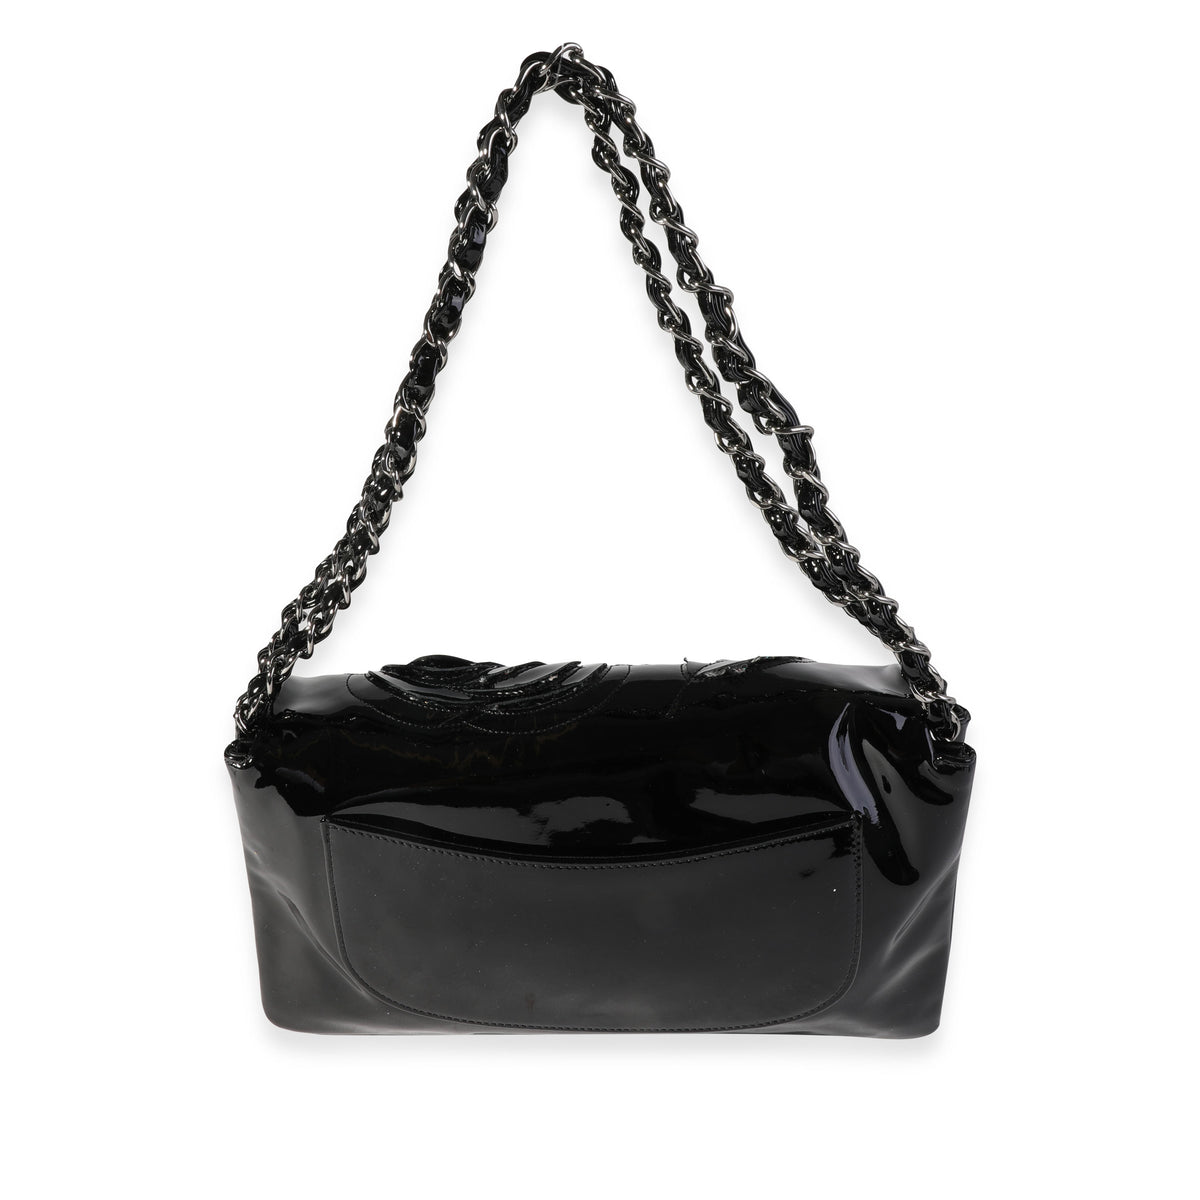 Chanel Black Patent Leather Tweed Camellia Petals Flap Bag